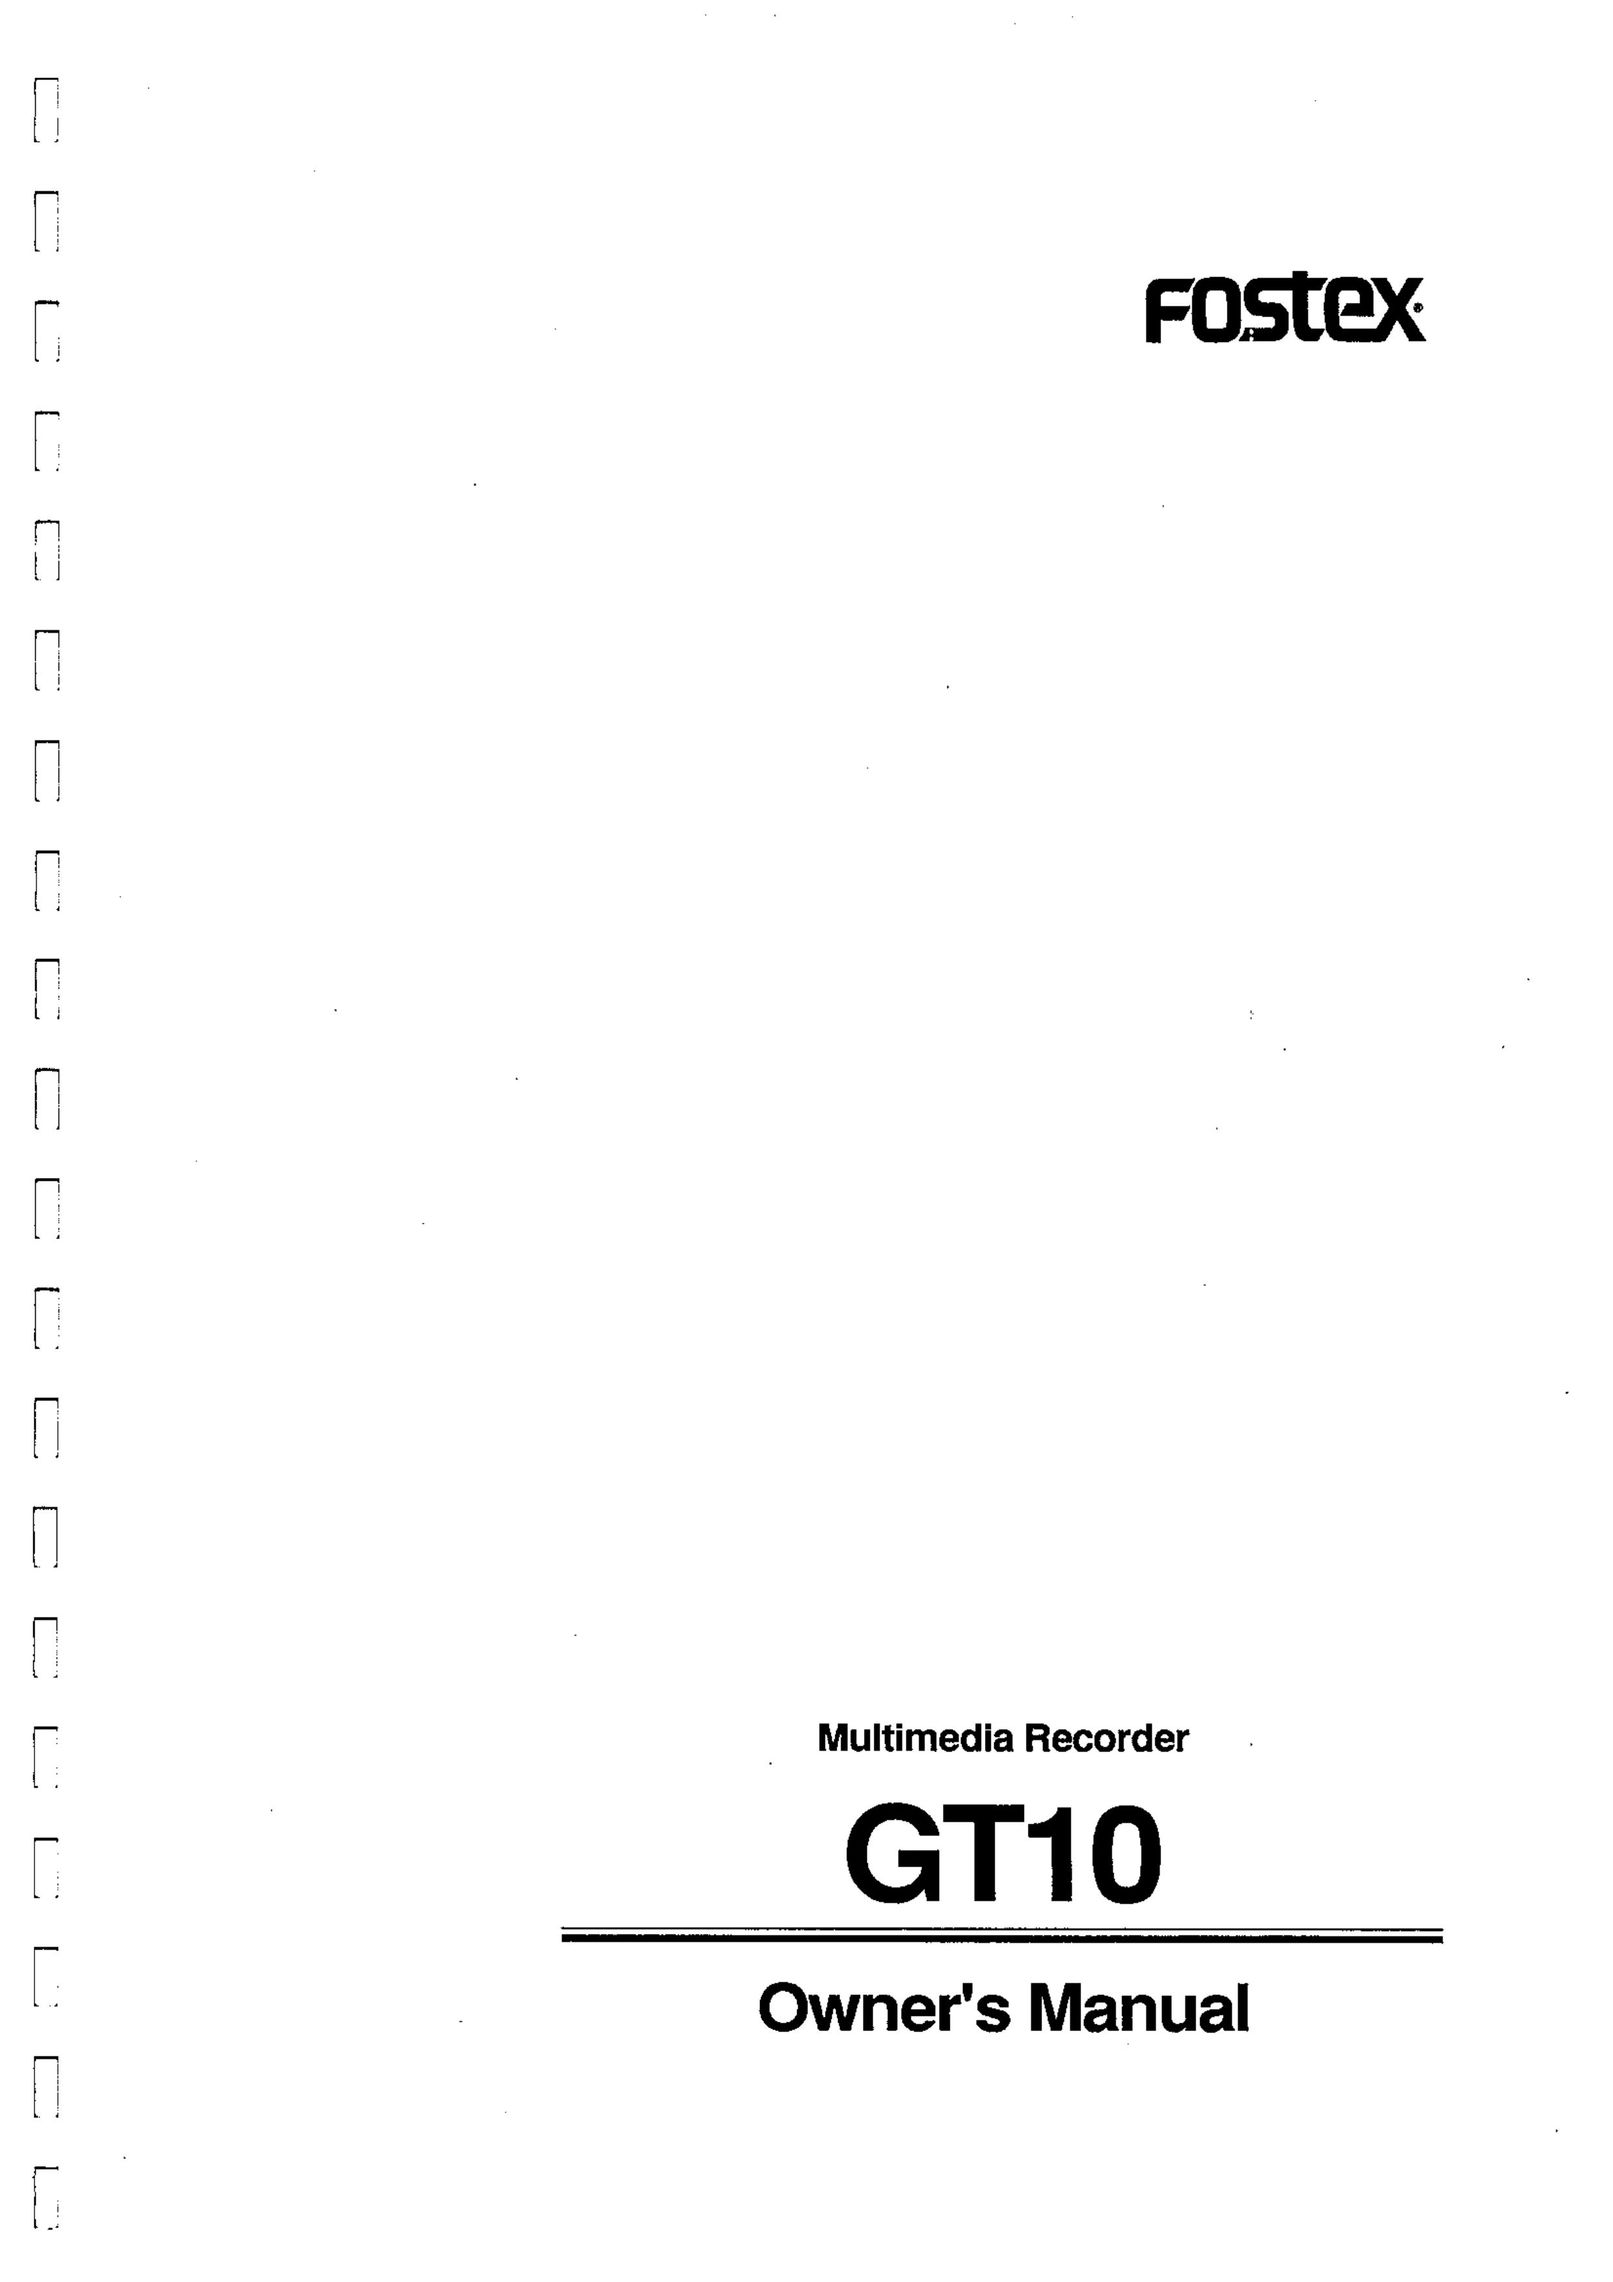 Fostex GT10 DVD Recorder User Manual